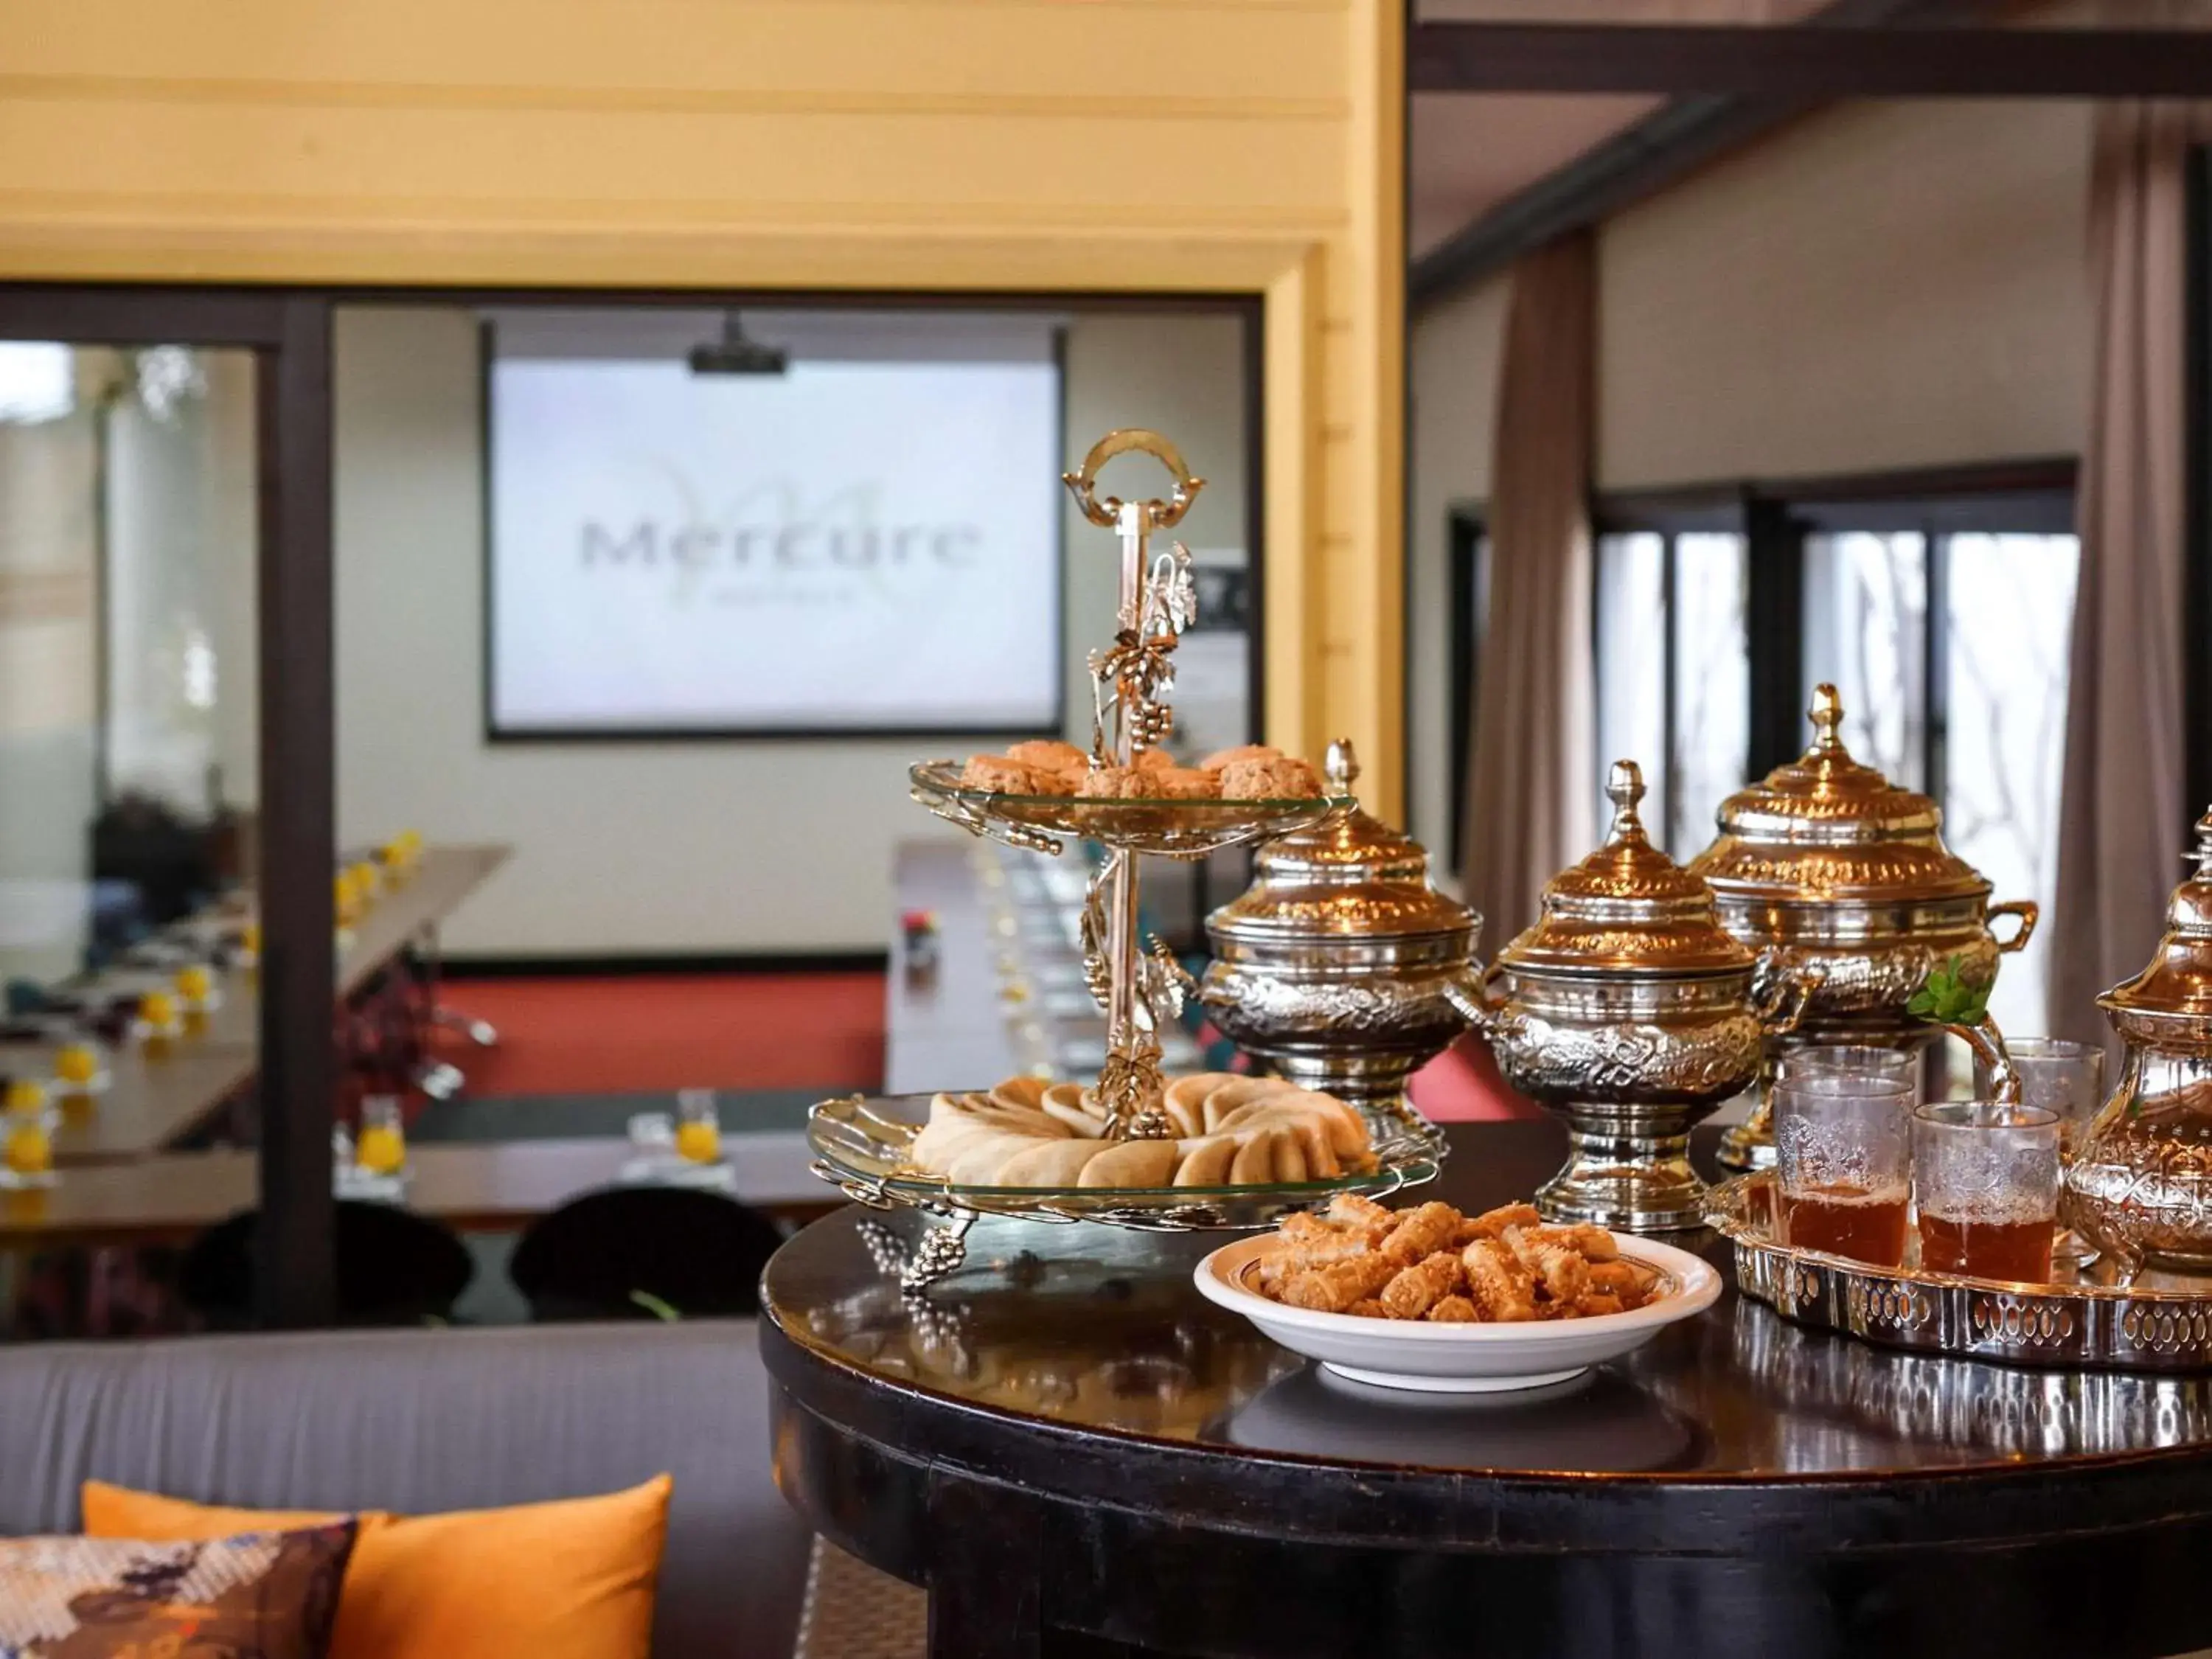 Food and drinks in Mercure Shéhérazade Rabat